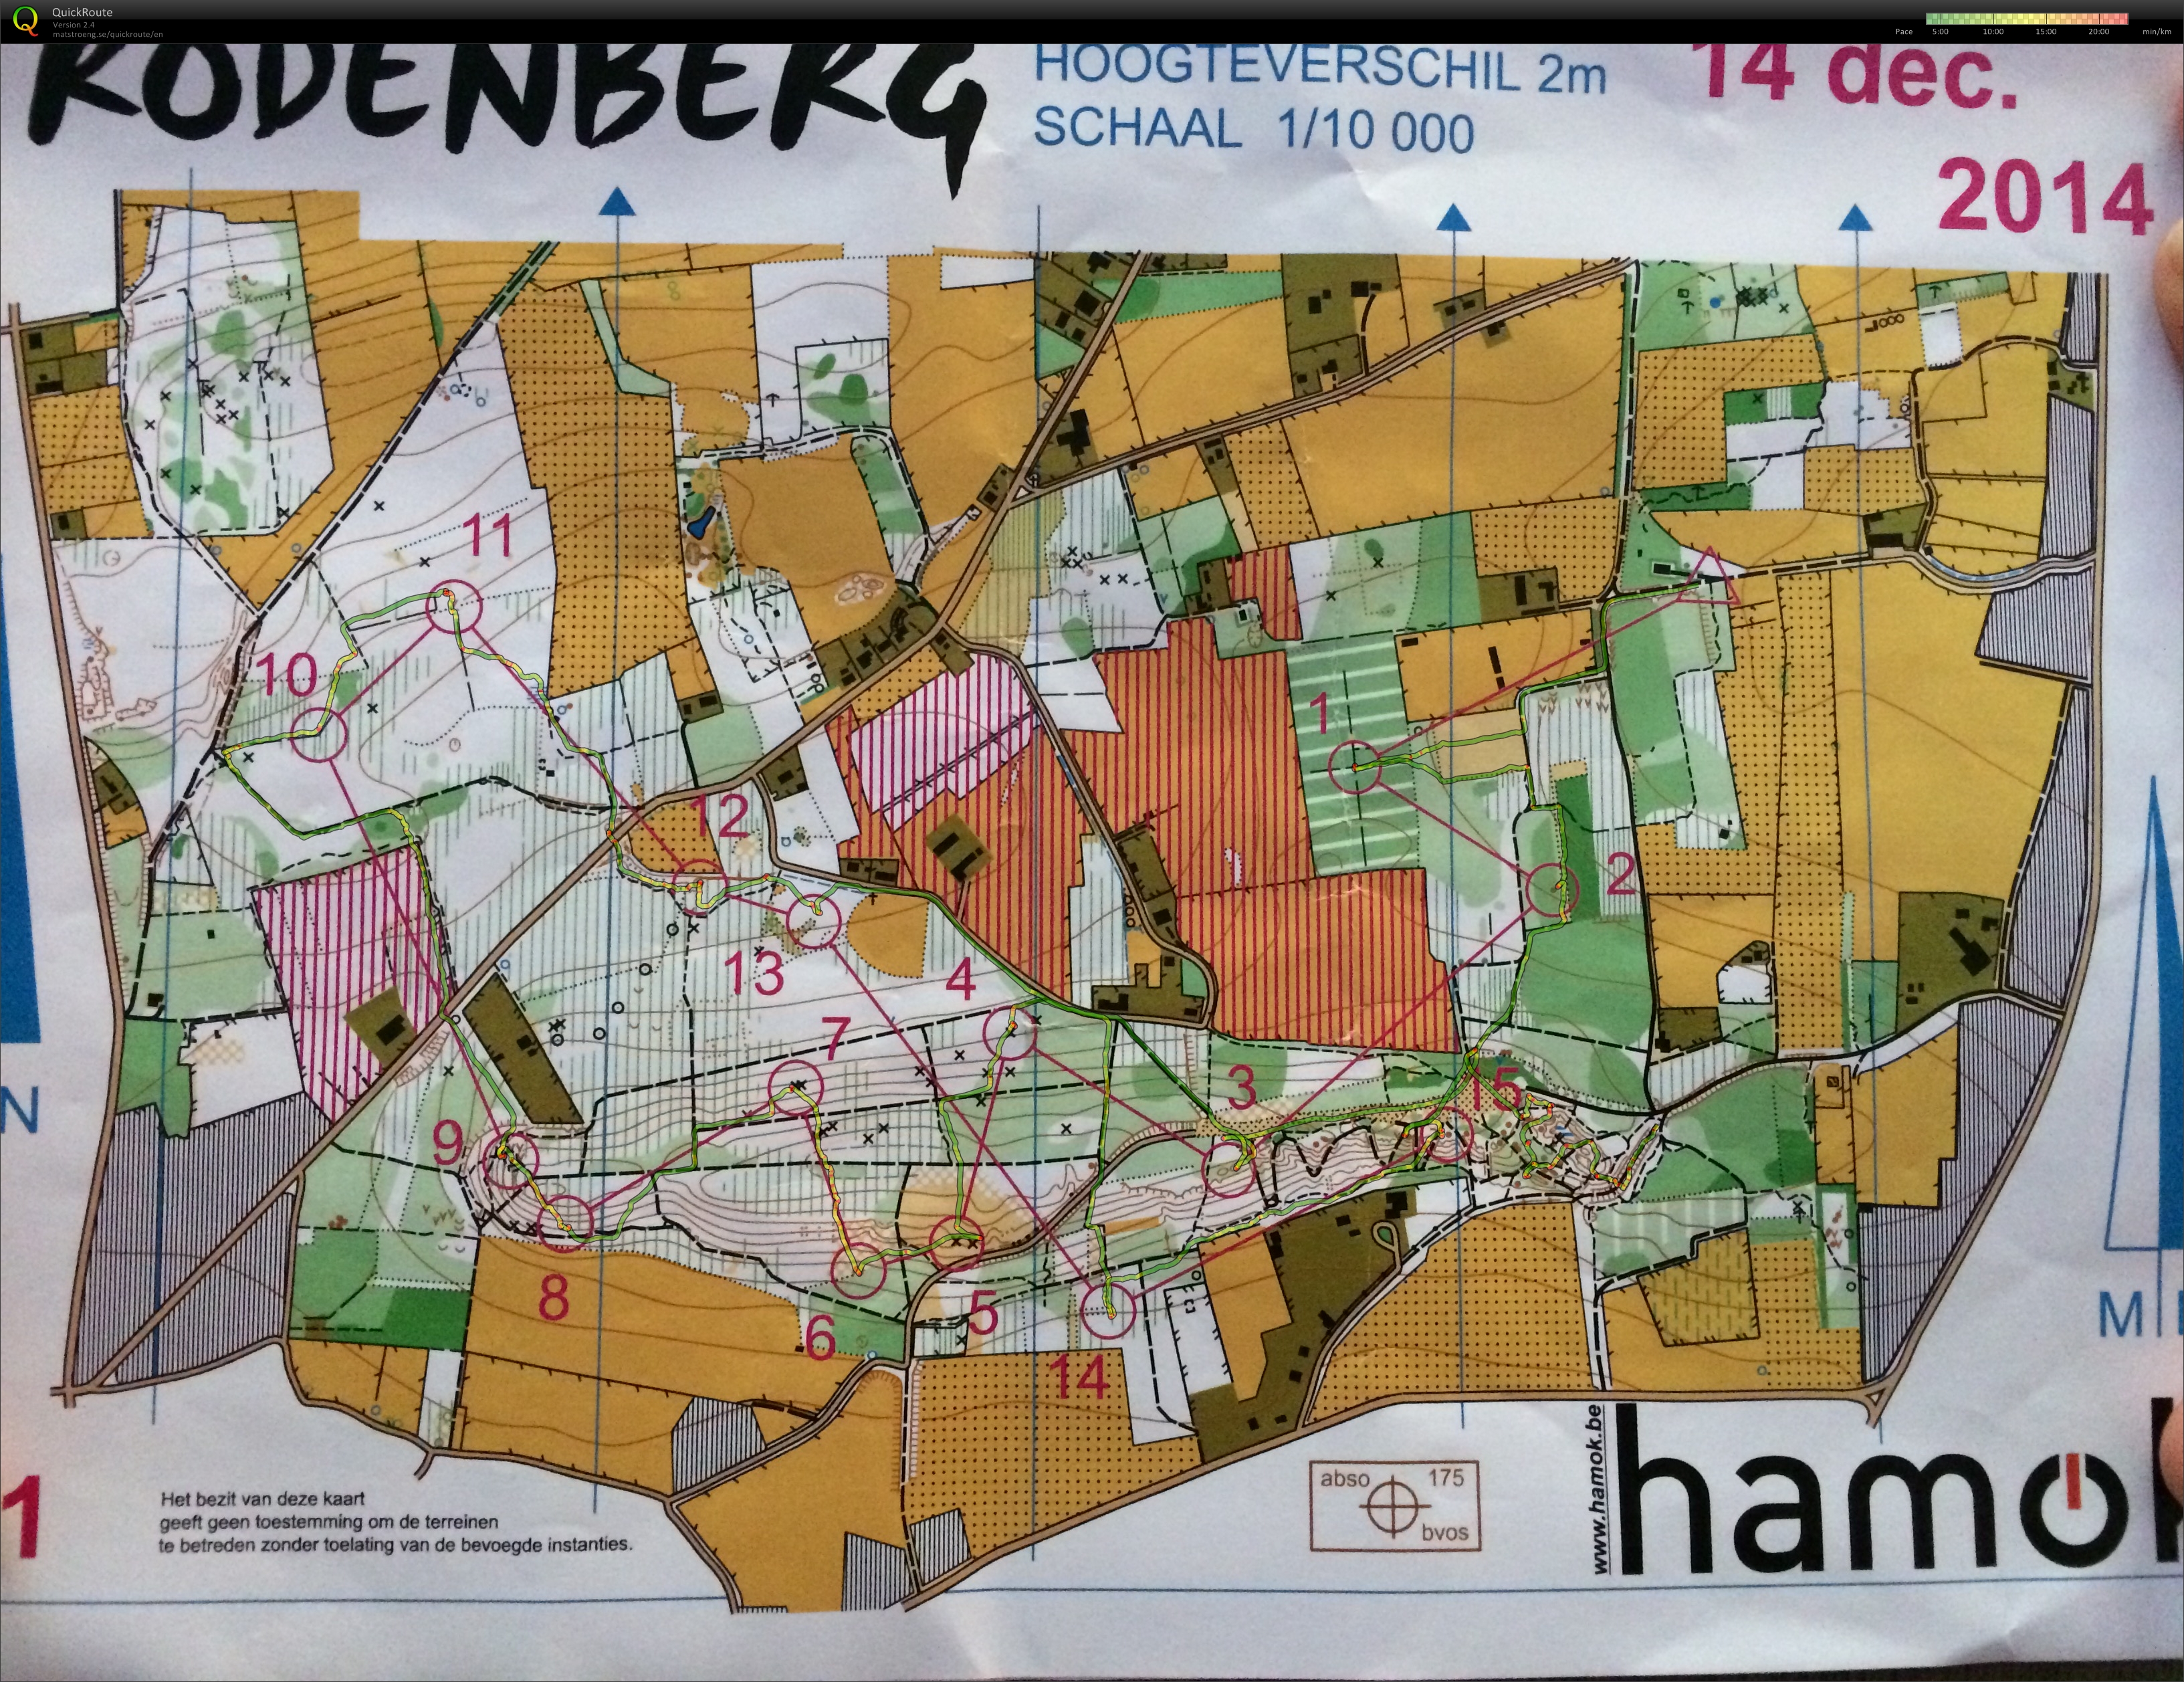 Rodenberg (14/12/2014)